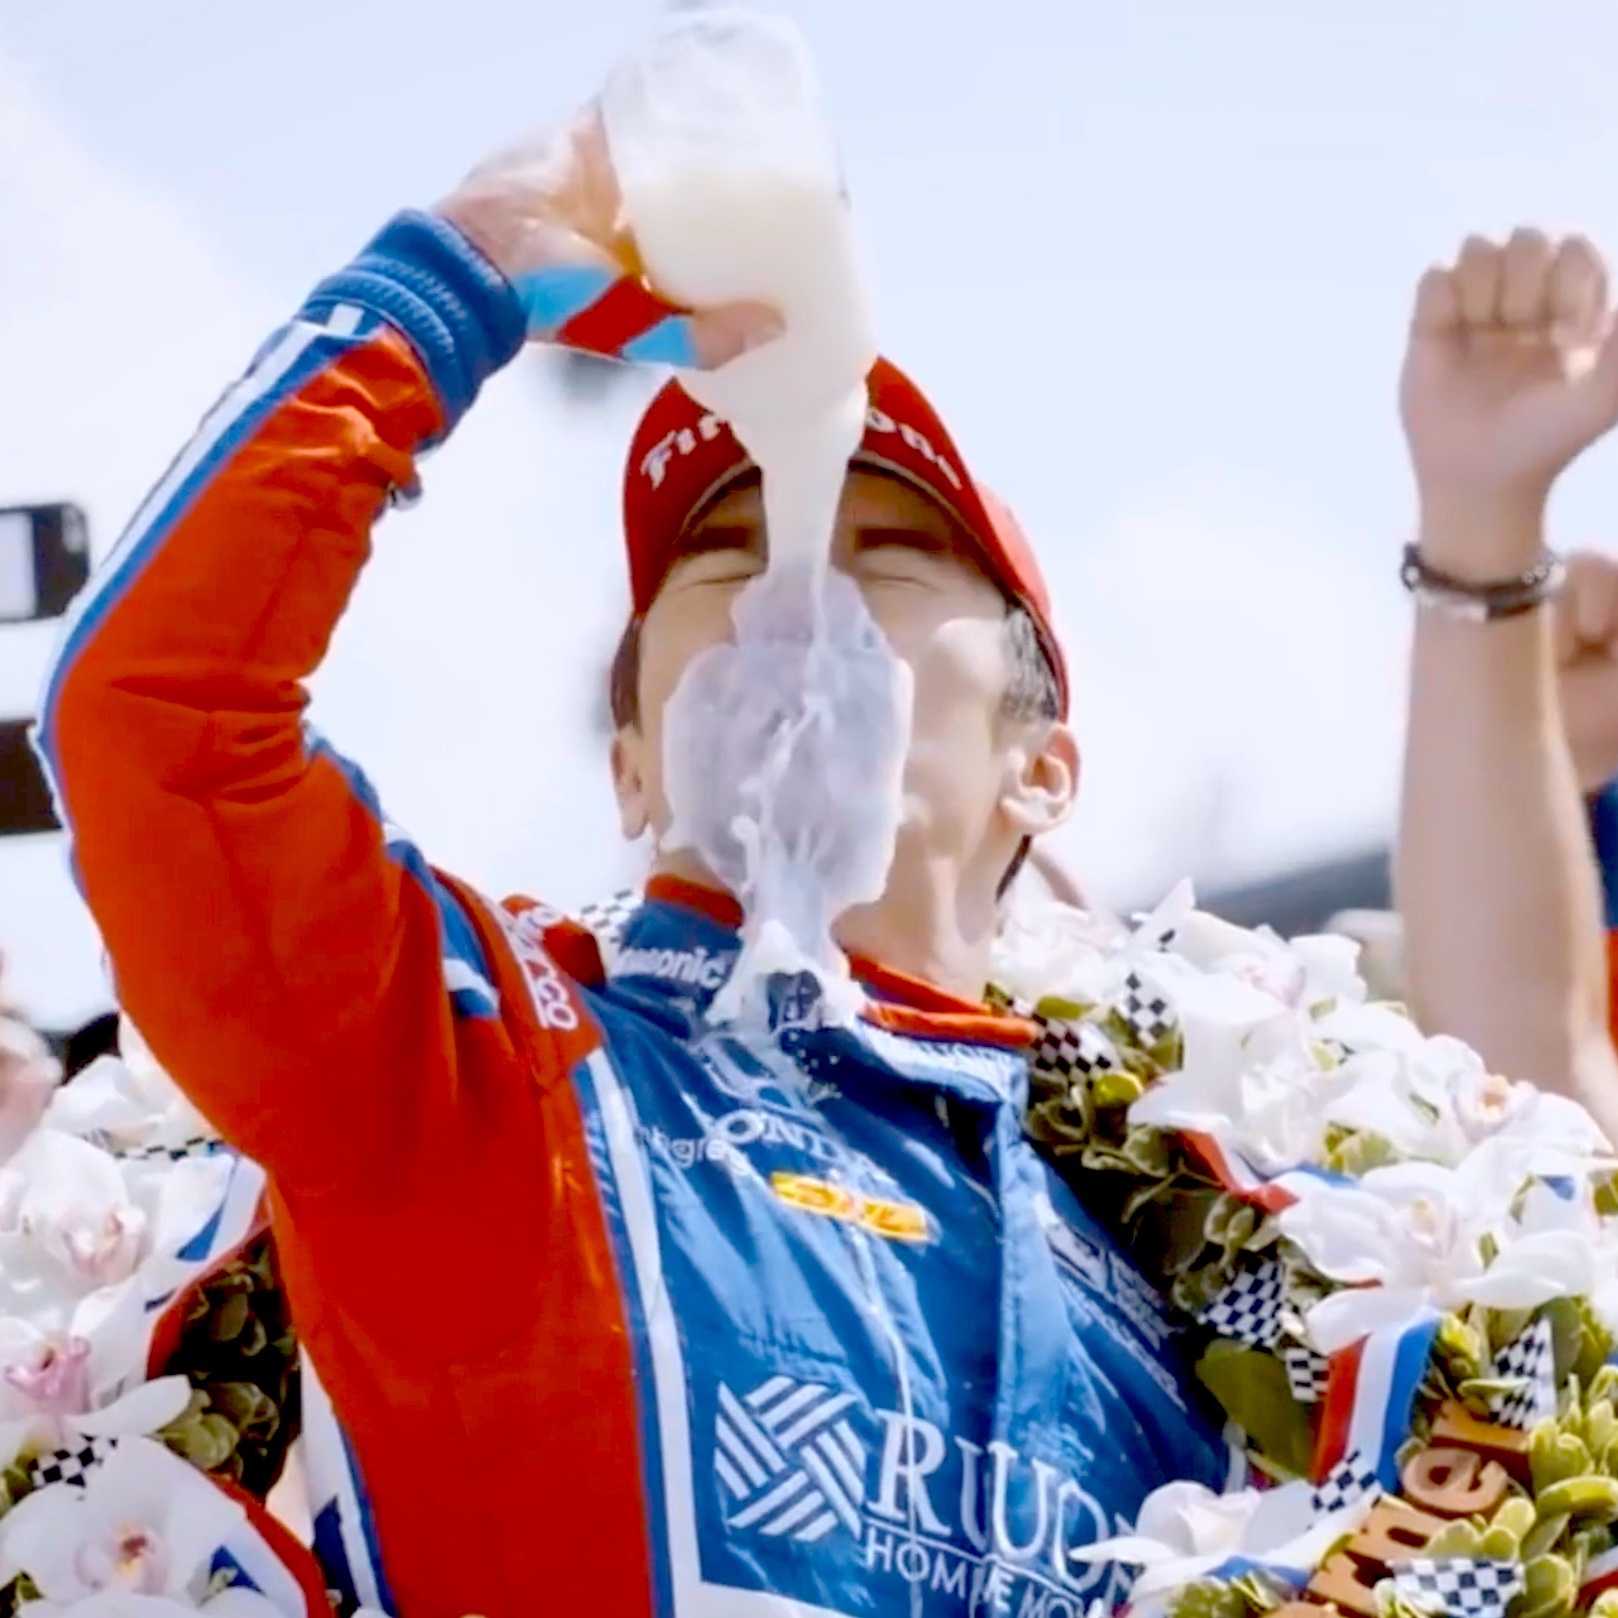 Takuma Sato drinks the milk after winning the Indy 500